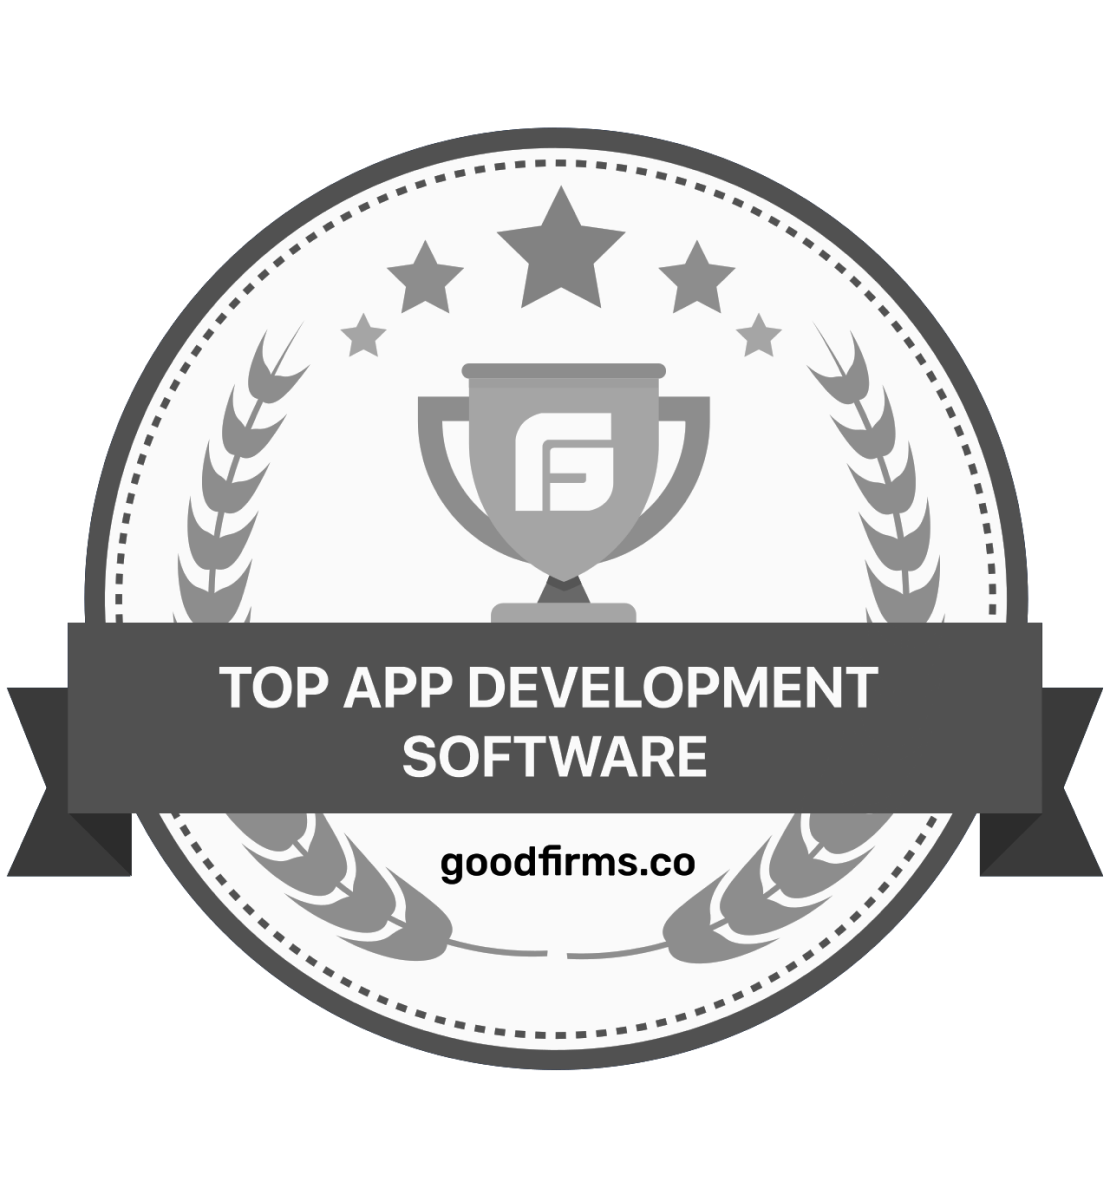 Top App Development Software